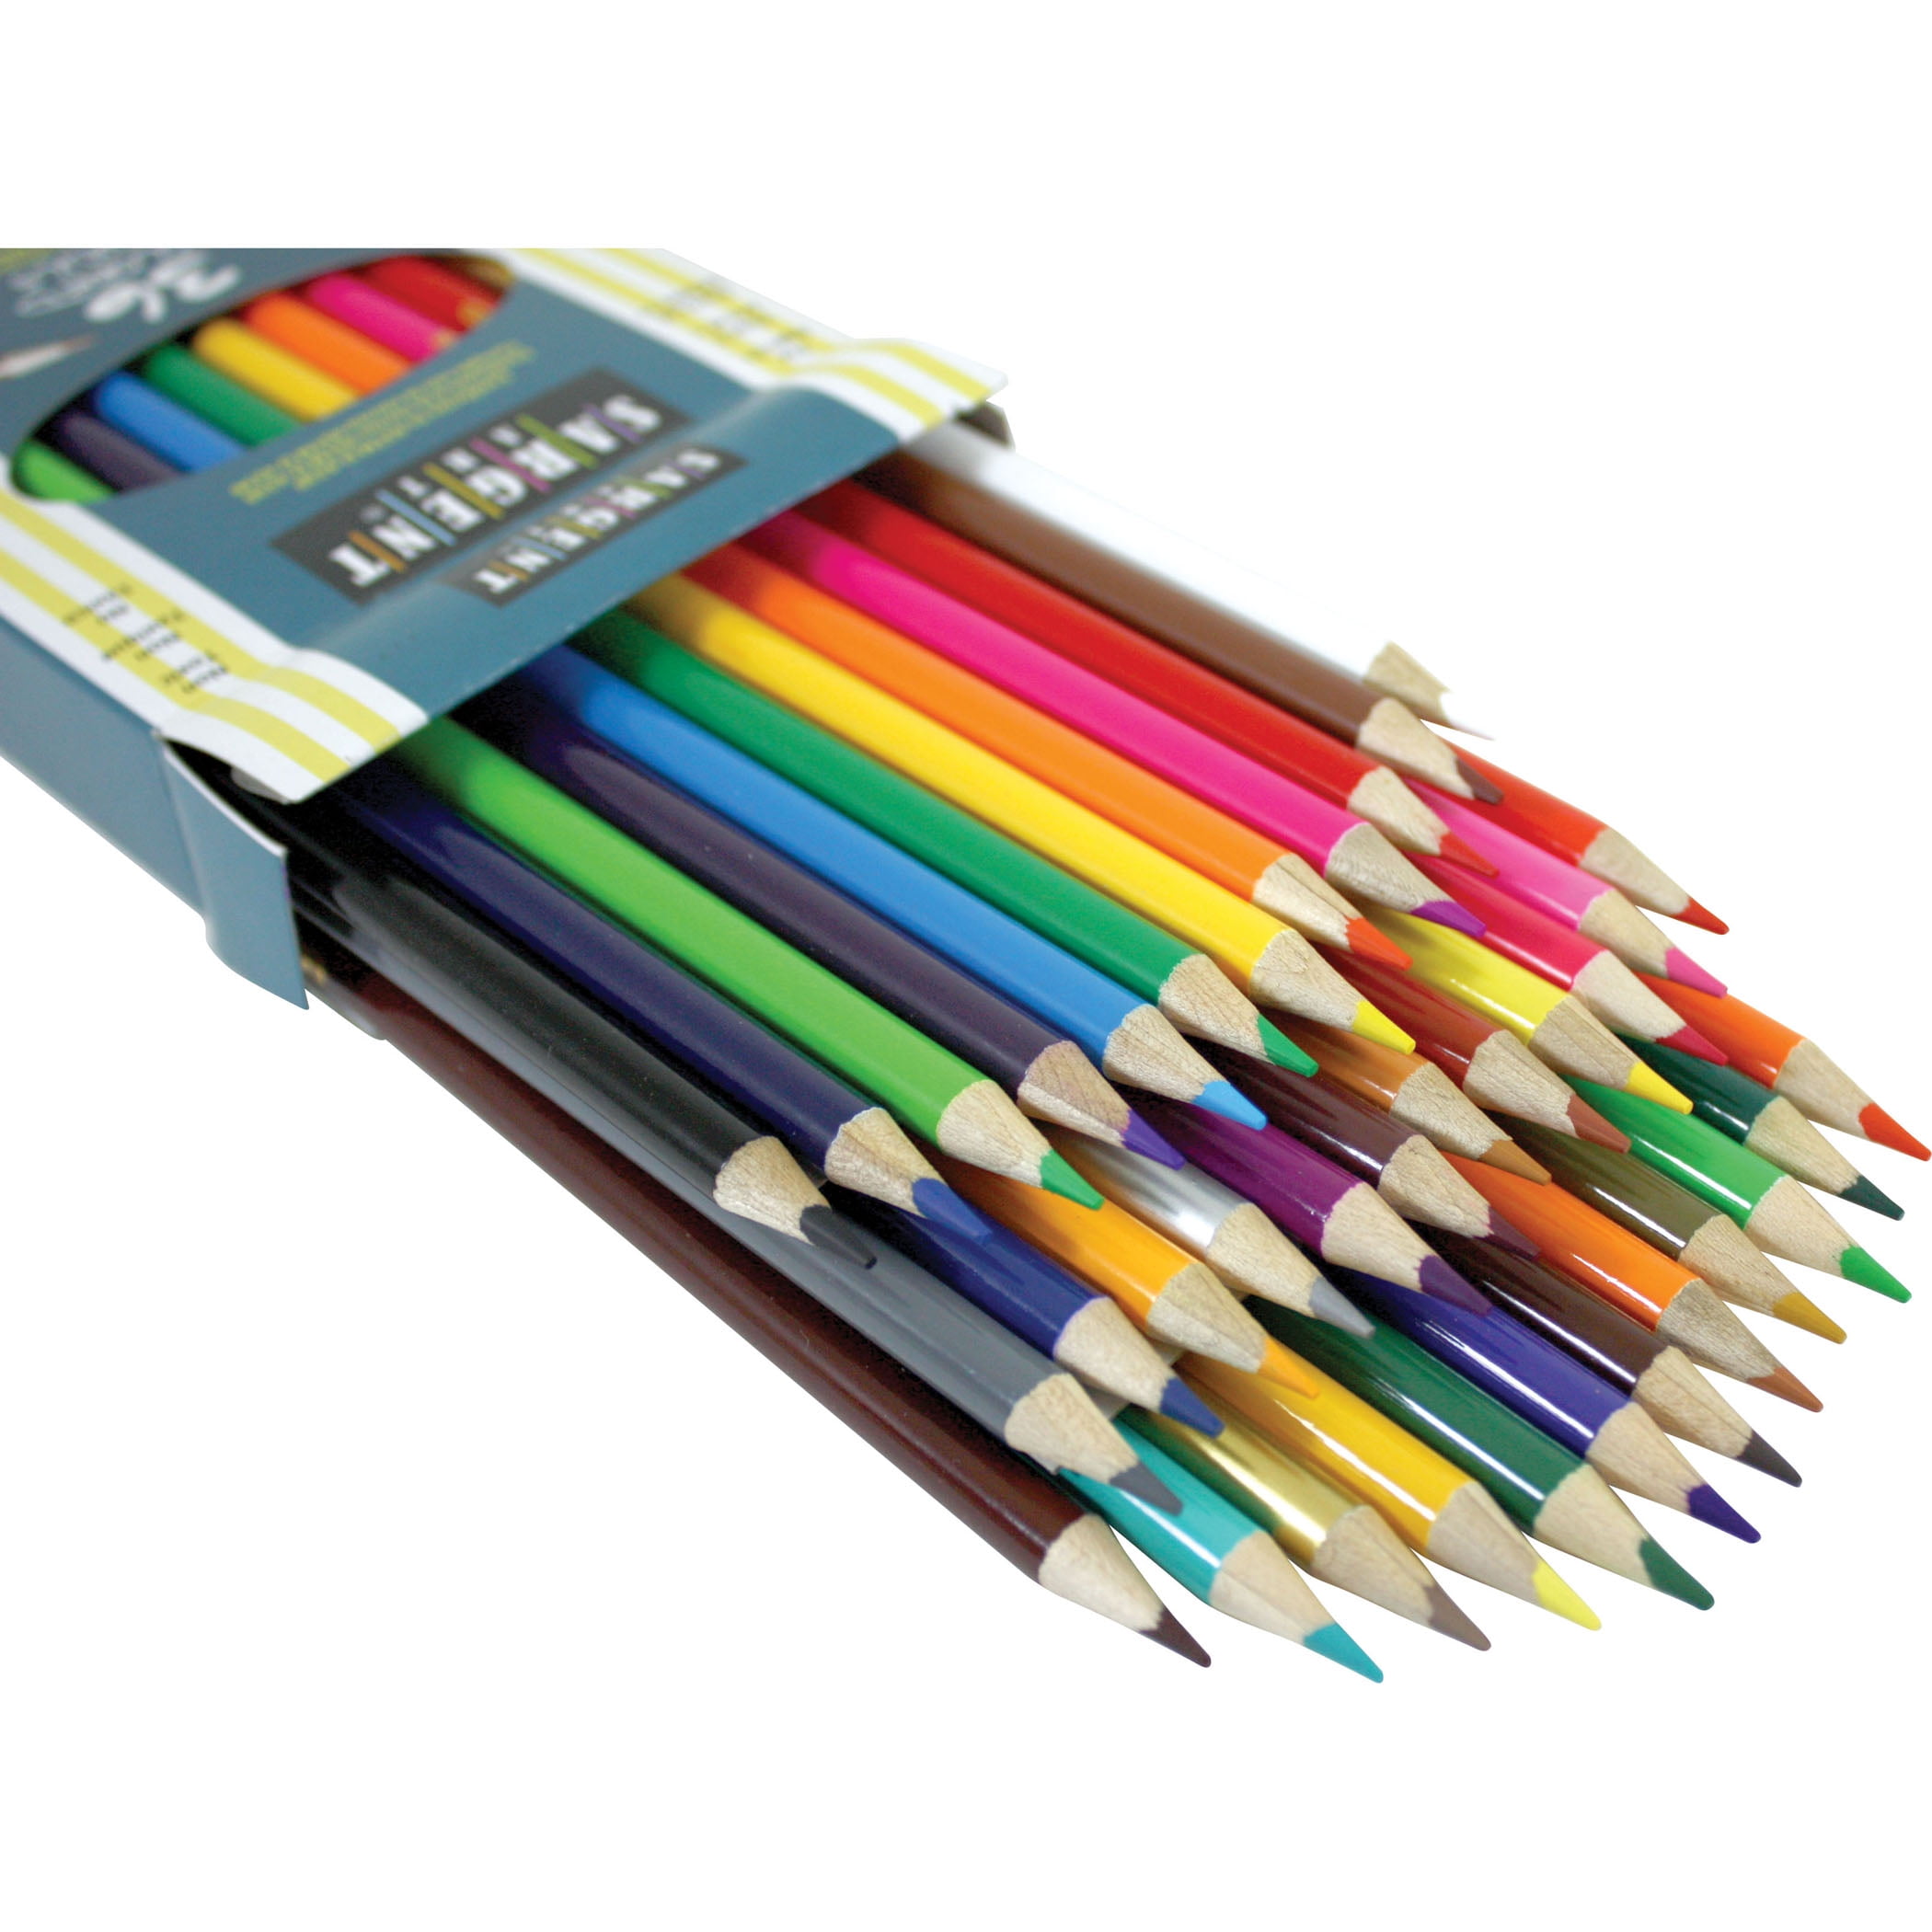 Sargent Art SAR227241 Neon Colored Pencils 